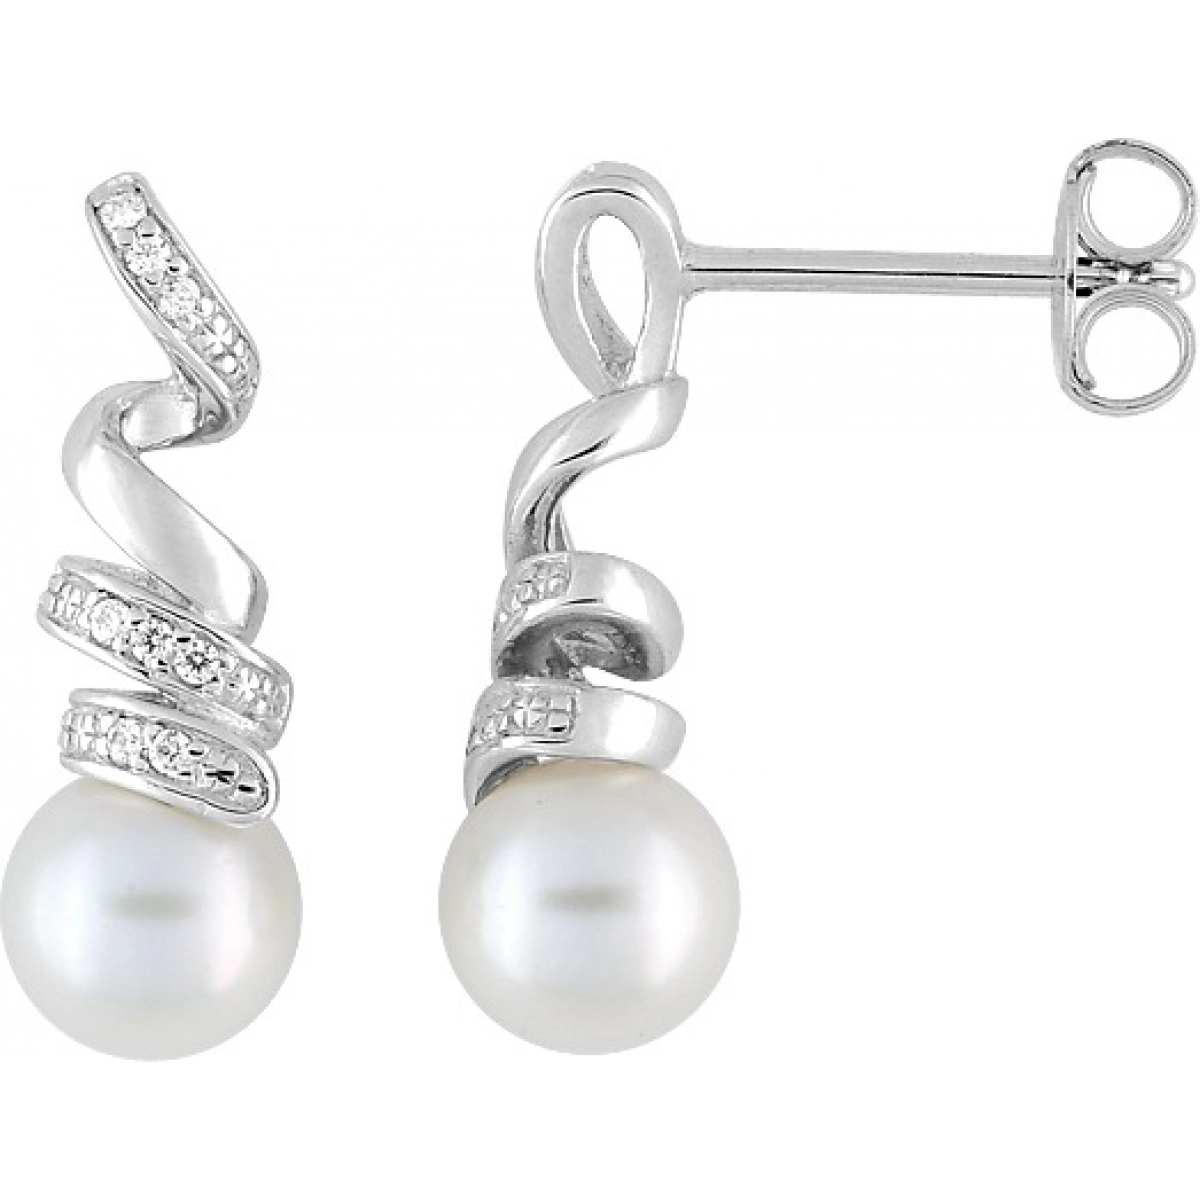 Earrings pair w. imitation pearl rh925 Silver  Lua Blanca  335730.1.0